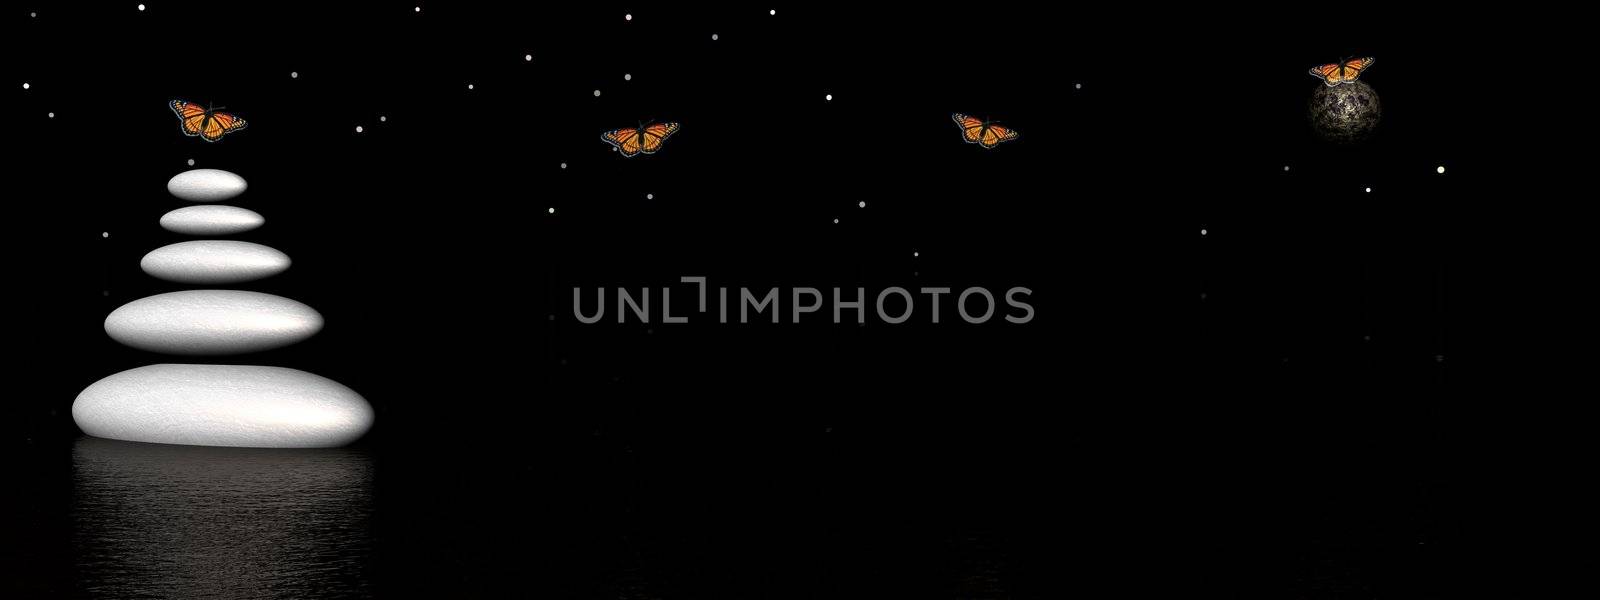 Zen stones and butterflies by night by Elenaphotos21